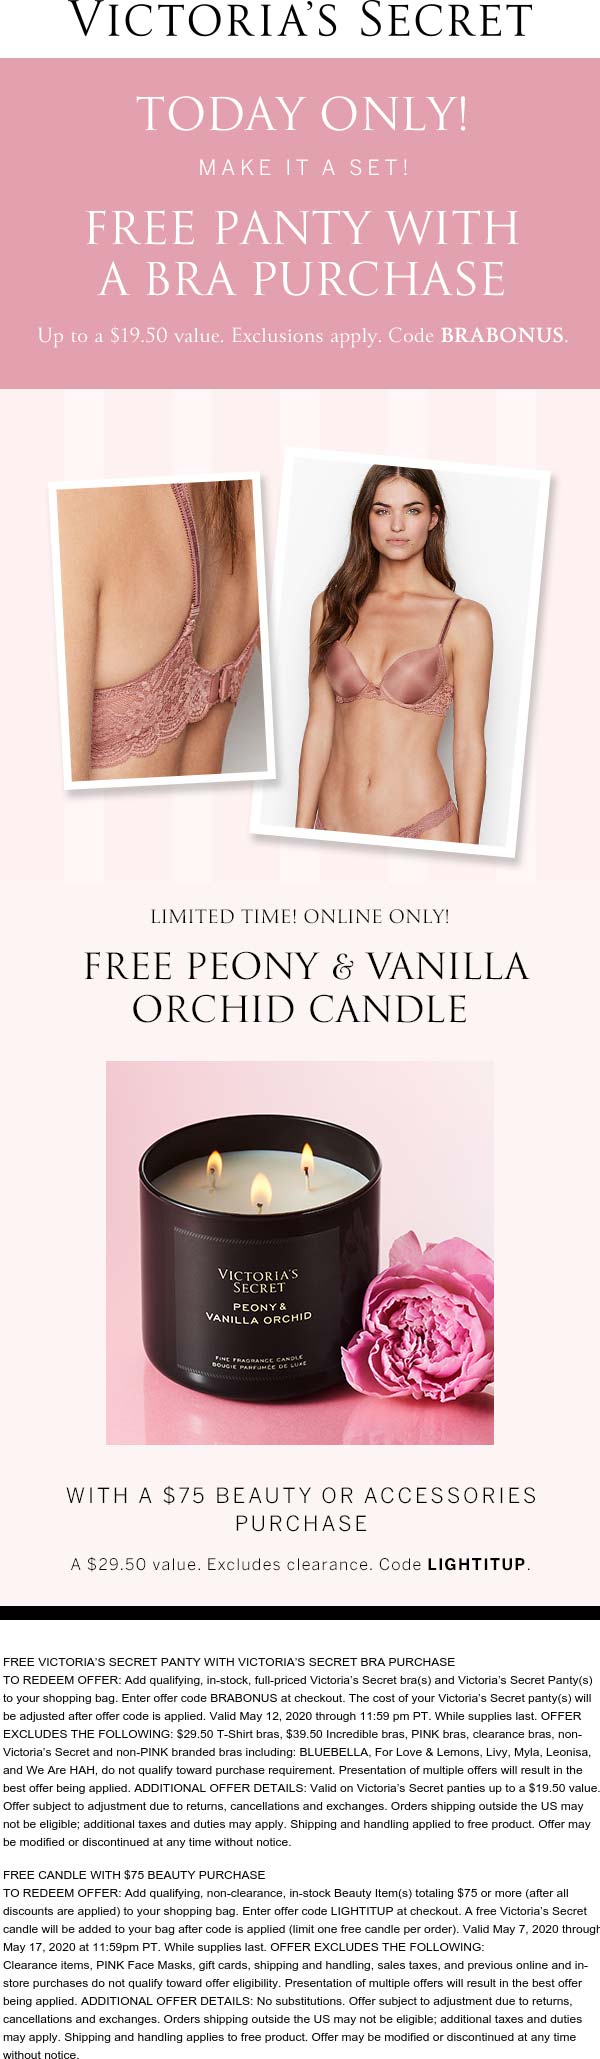 Victorias Secret stores Coupon  Free panty with your bra & candle on $75 spent today at Victorias Secret via promo code BRABONUS & LIGHTITUP #victoriassecret